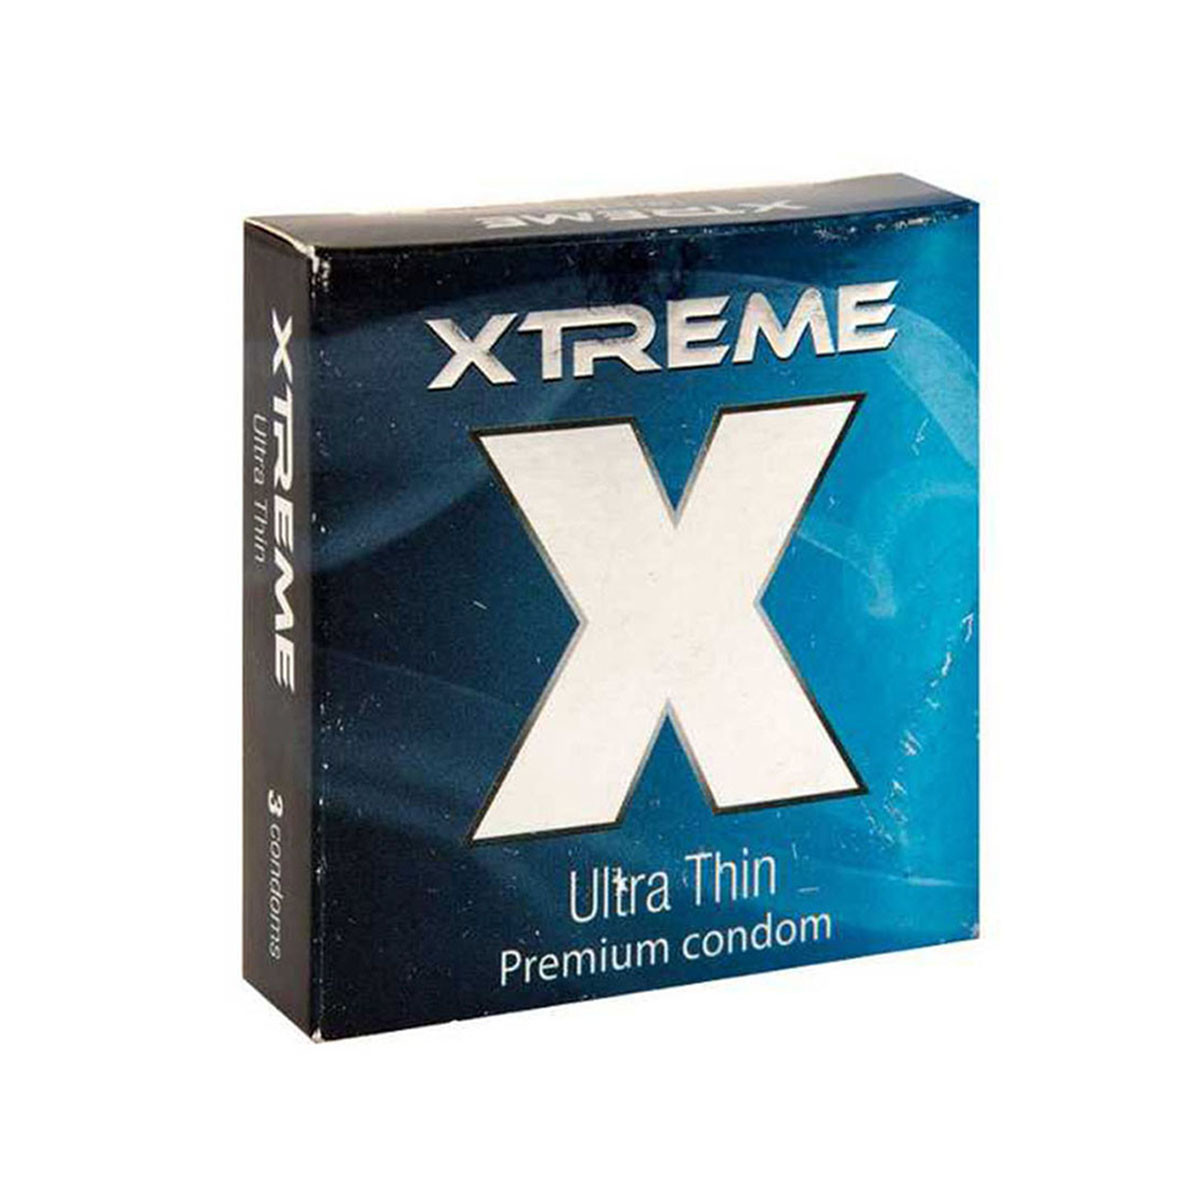 Xtreme Ultra Thin Condom Single 1Pack 3x1= 3pcs & 12Pack= 1 Box Condoms